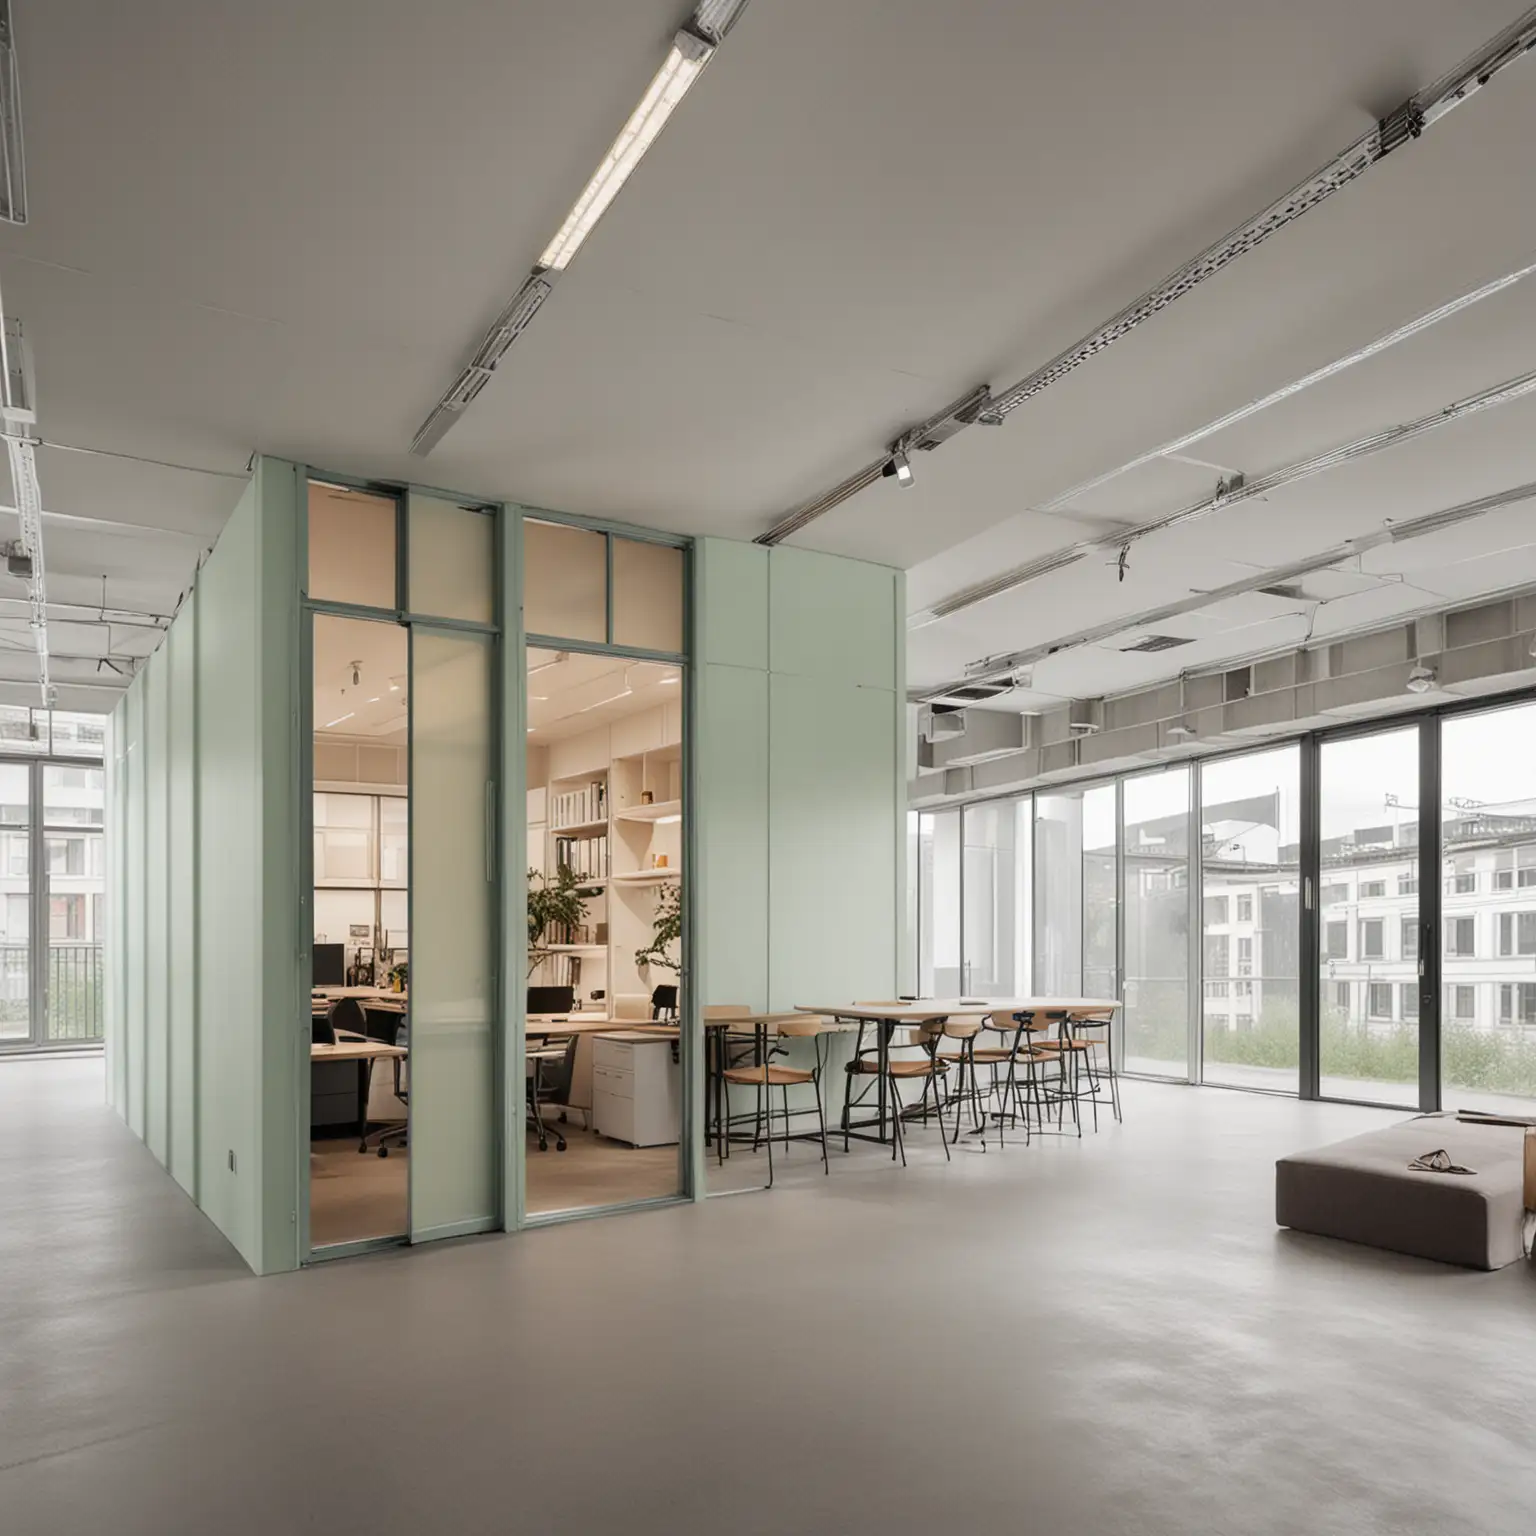 Designer Office Pavilion with Frameless Windows in Bright Open Room